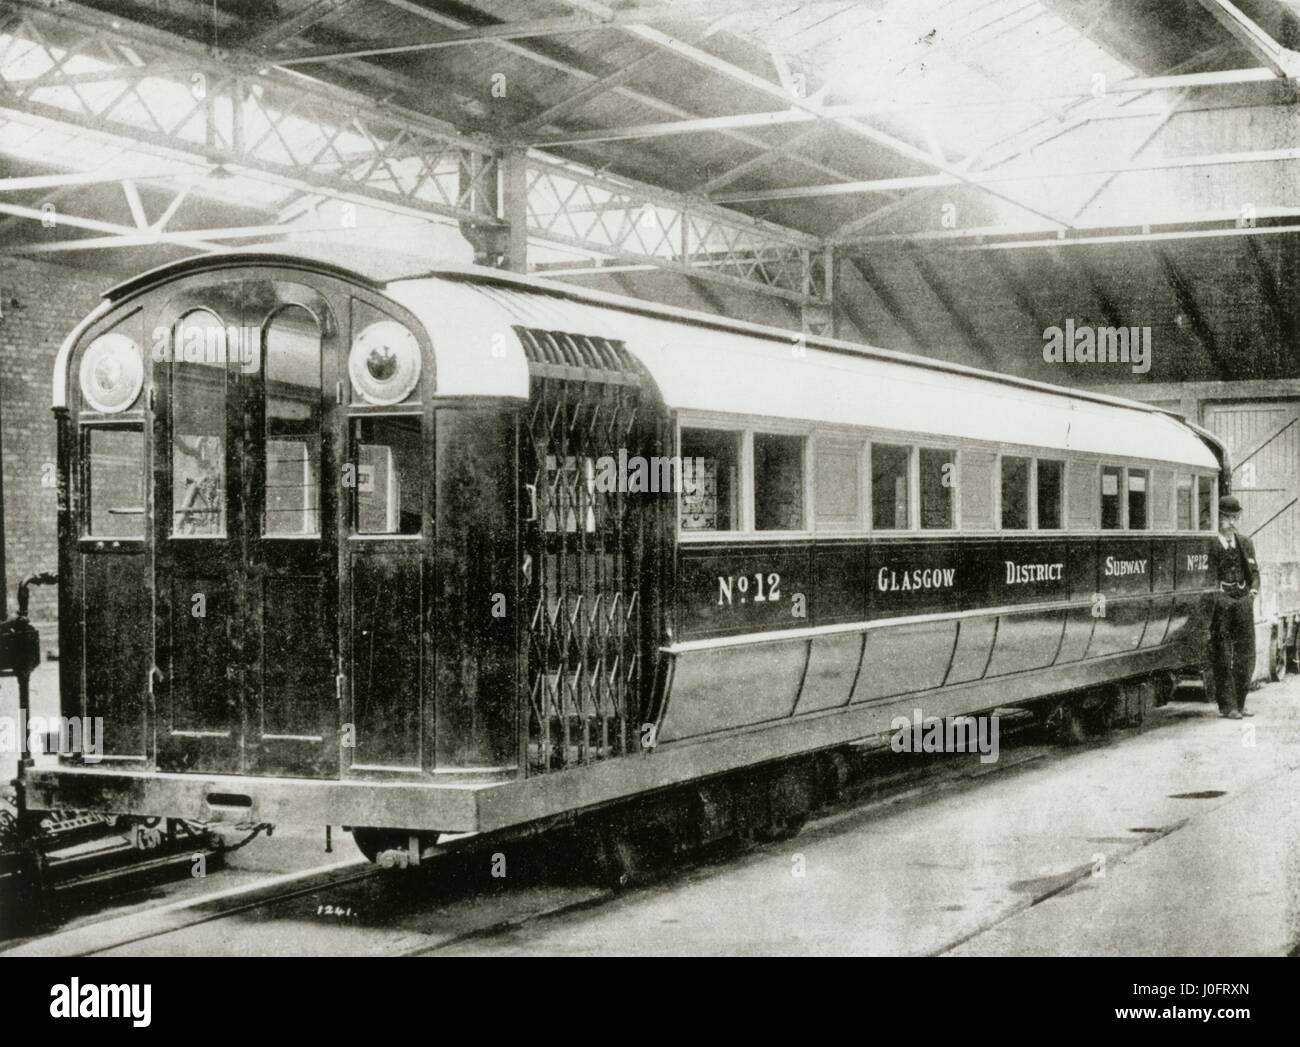 Glasgow District Subway train Stockfoto